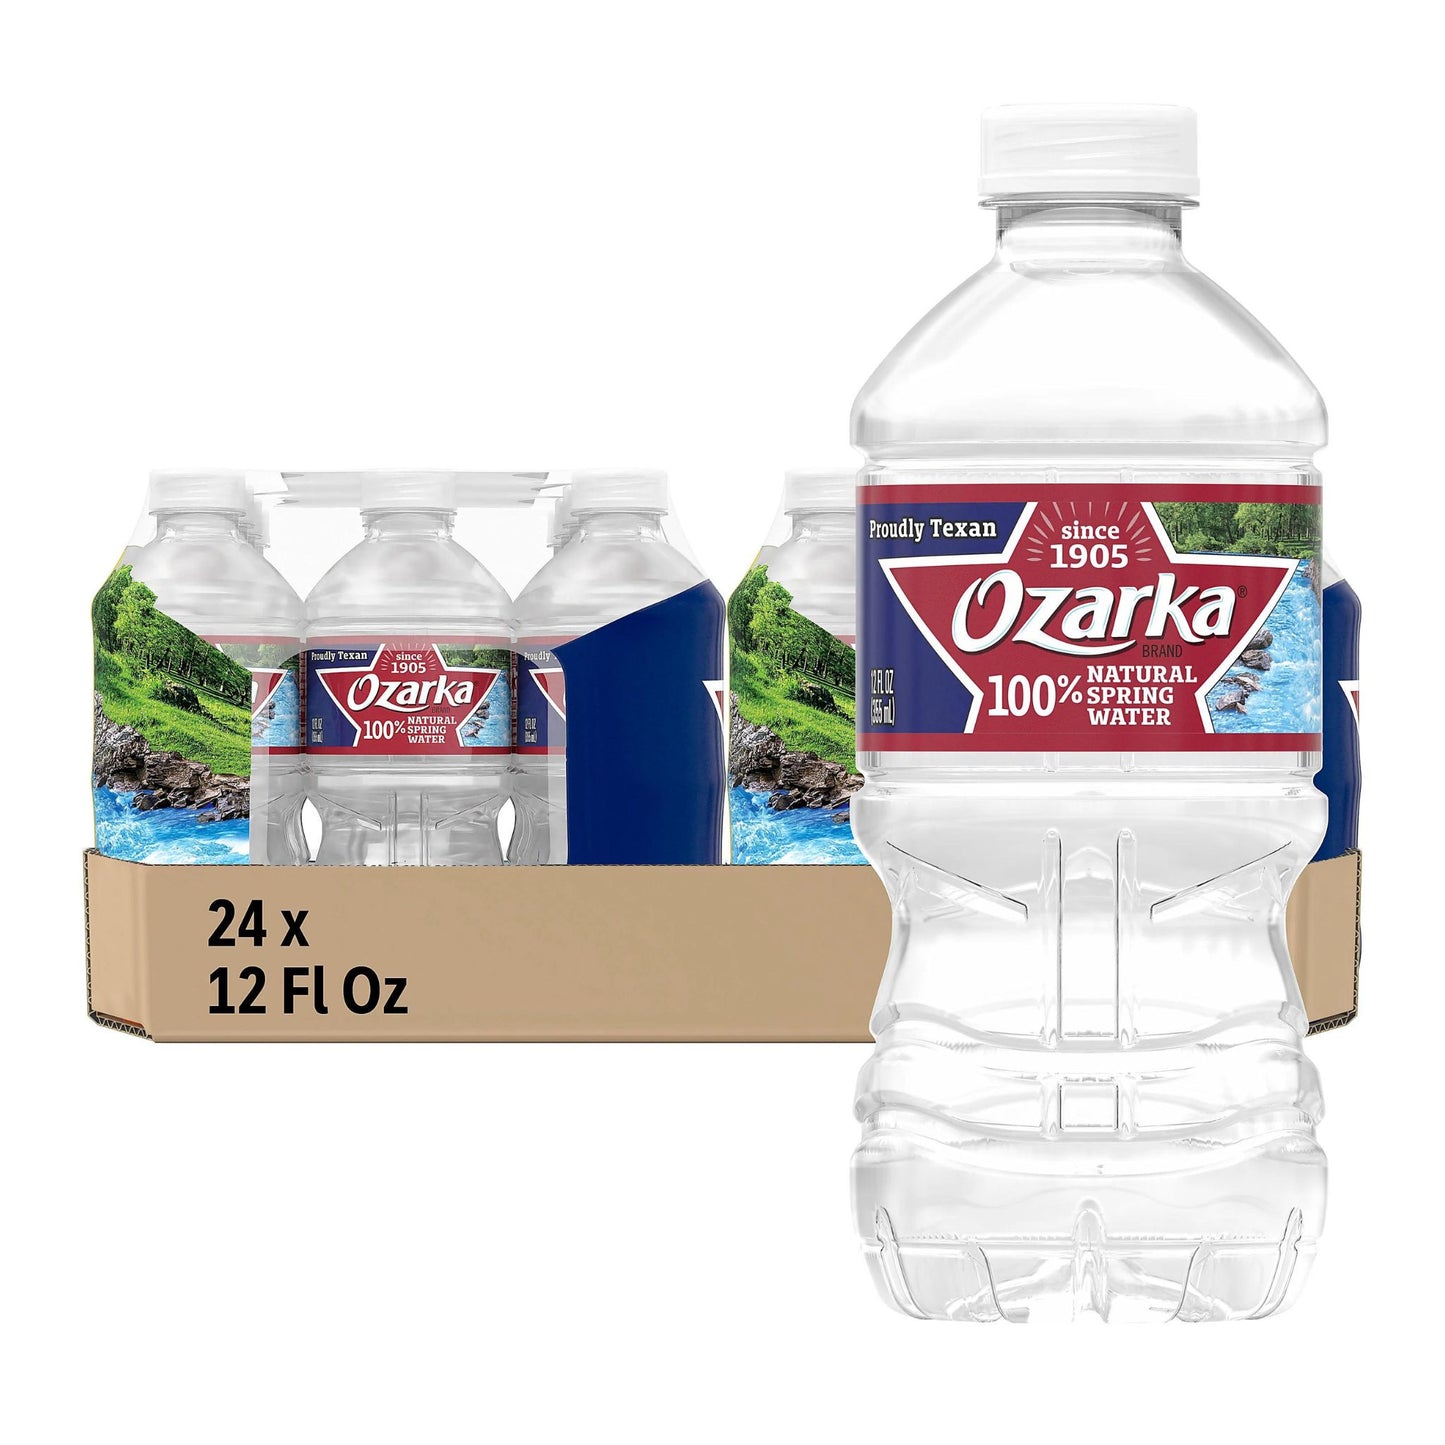 Regional Spring Water 12 Oz. Case Of 24 bottles